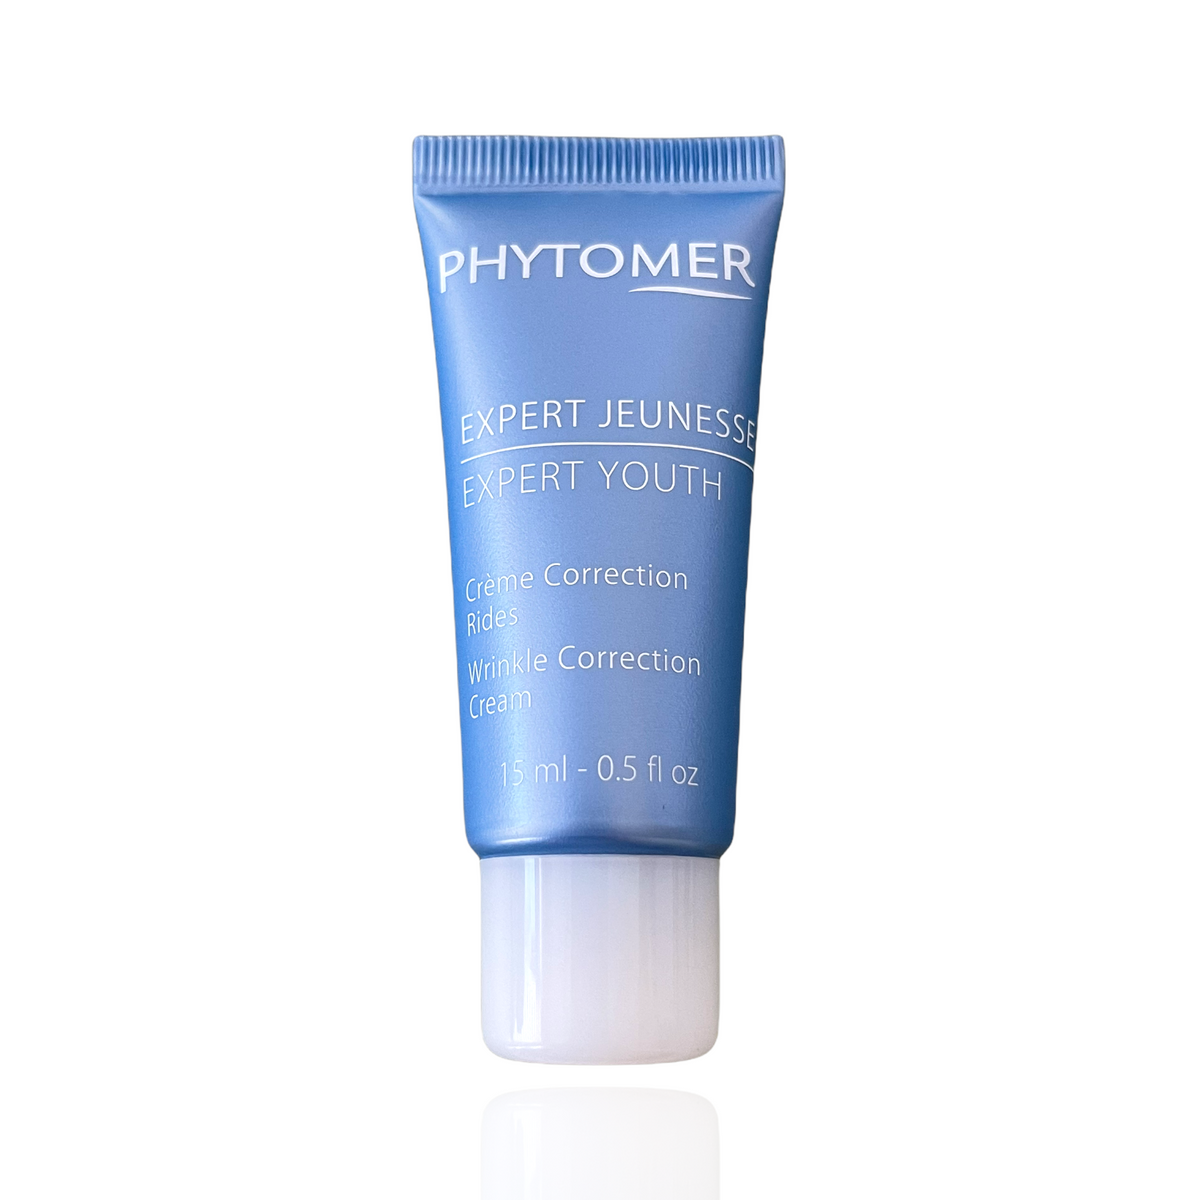 Phytomer Expert Youth Wrinkle Correction Cream (Travel Size)